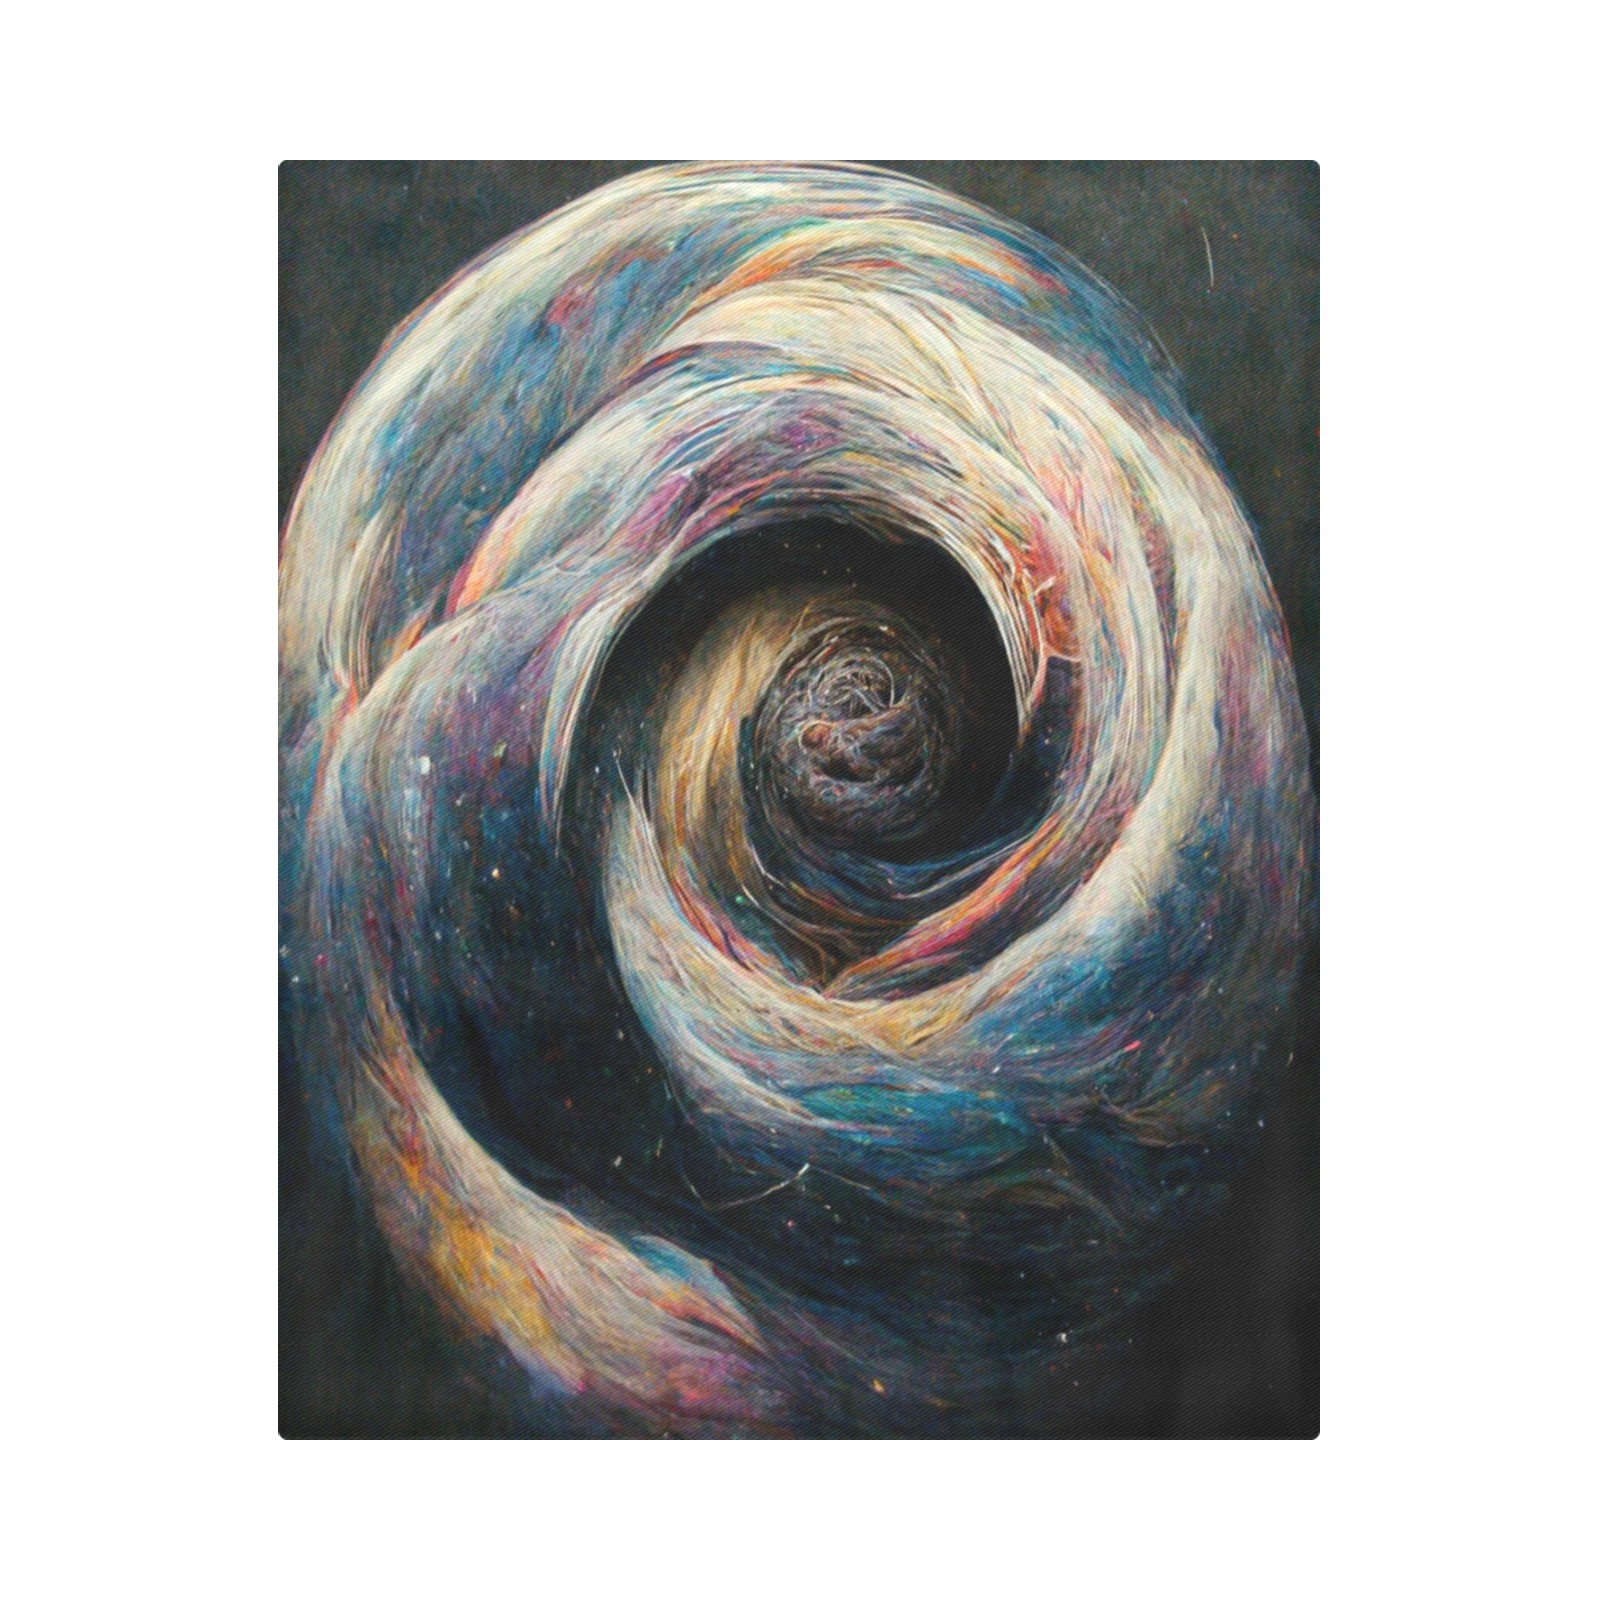 spiral galaxy Duvet Cover 86"x70" ( All-over-print)